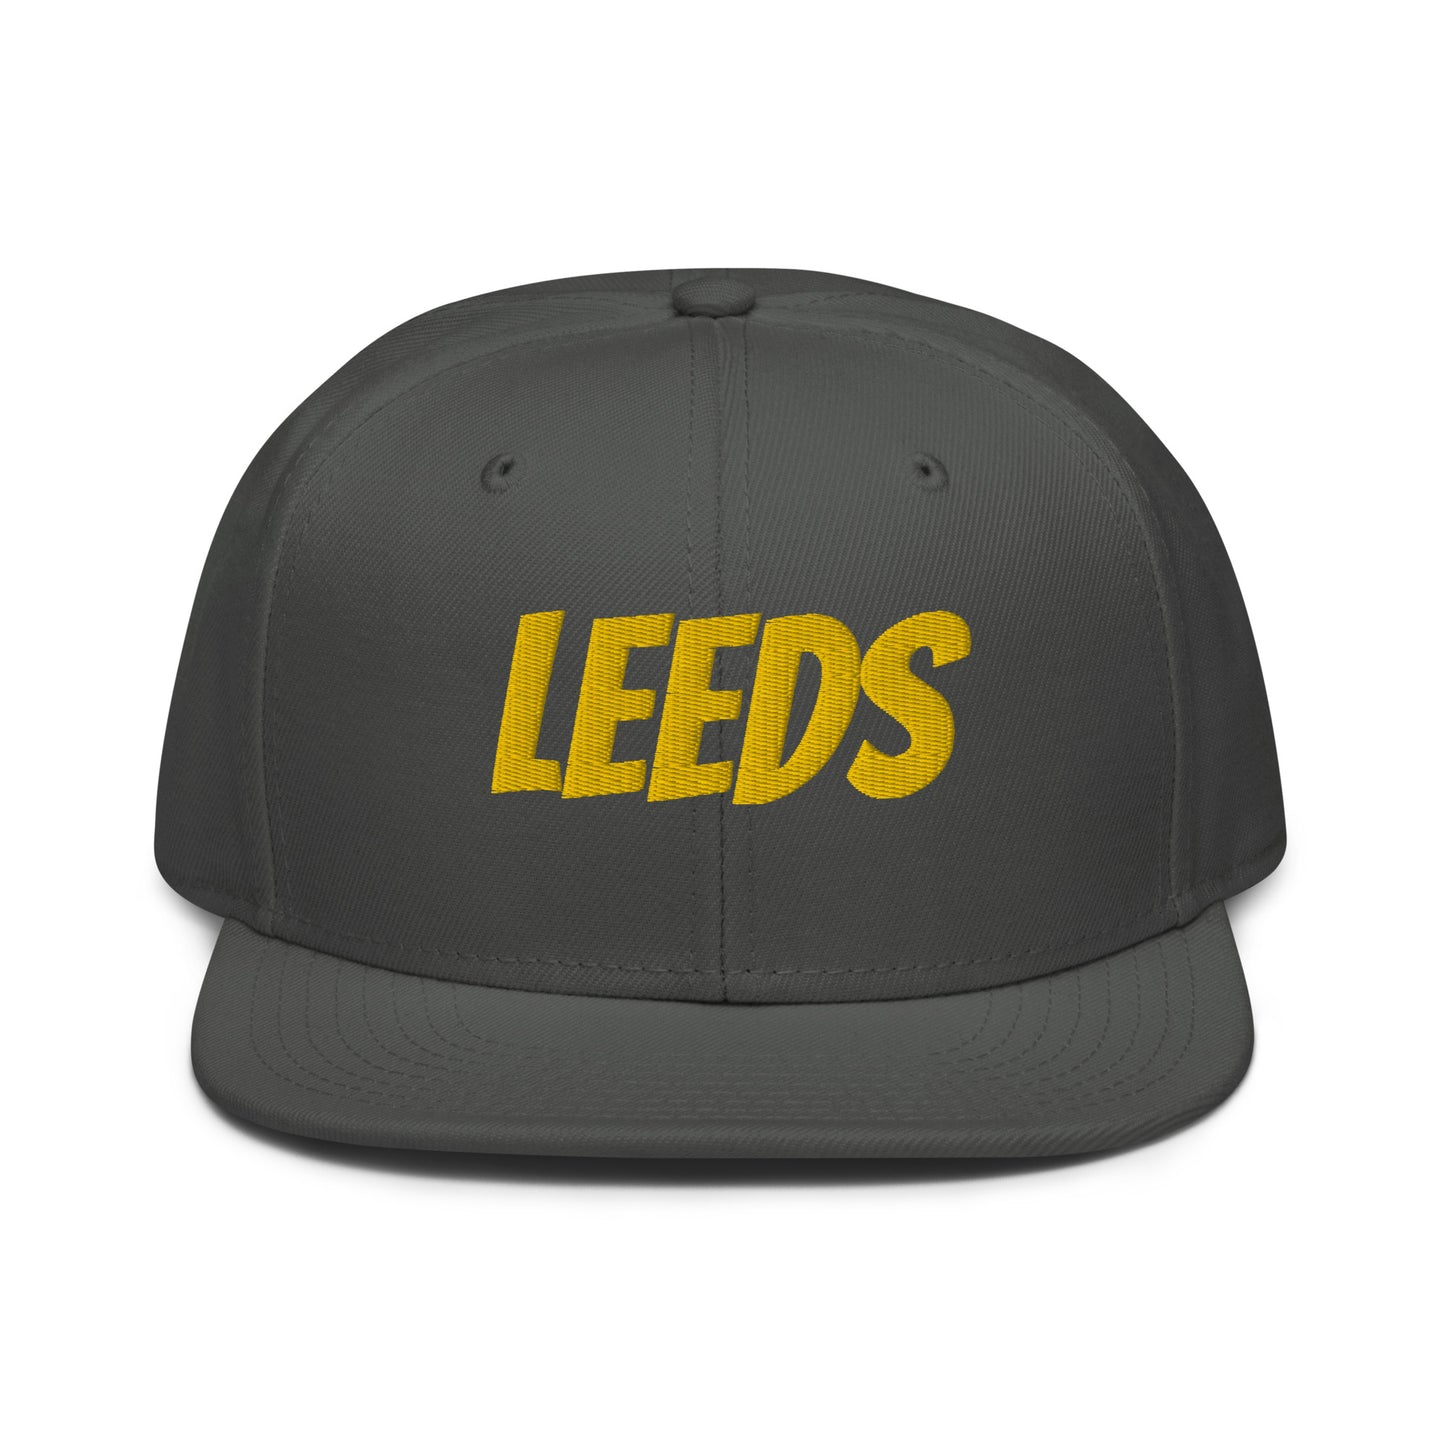 Leeds Snapback Hat